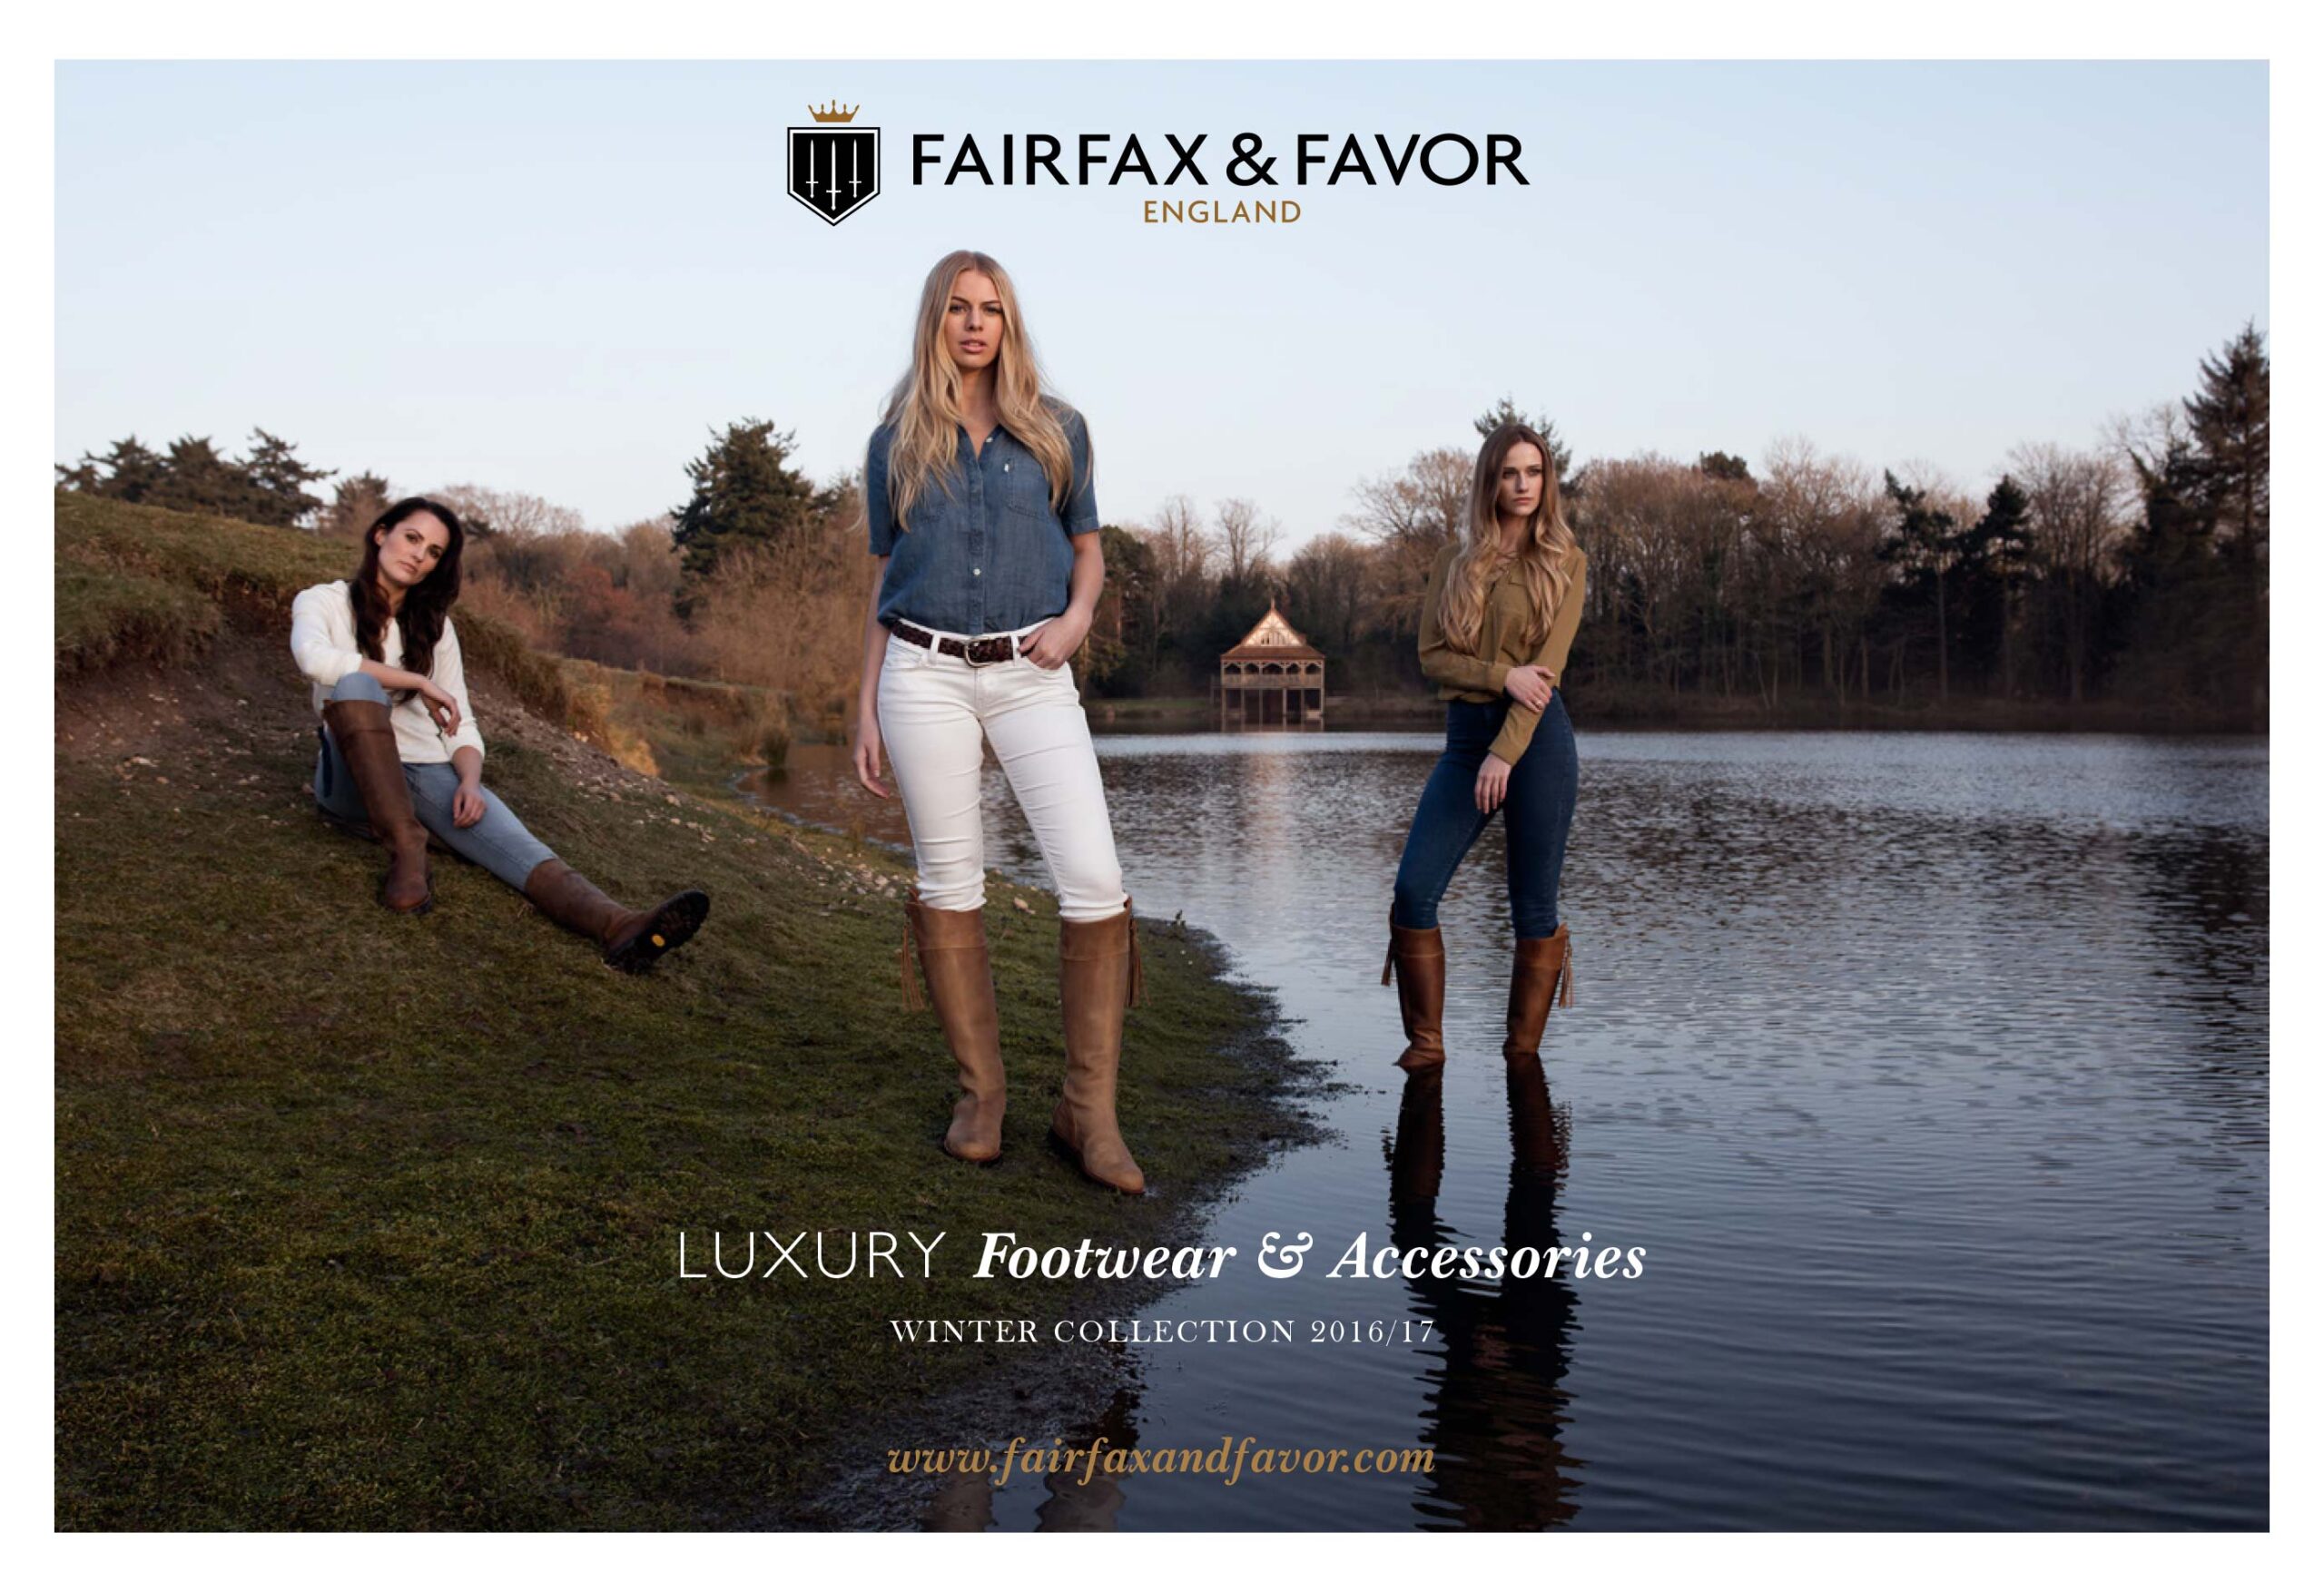 Fairfax & Favor Catalogue Design